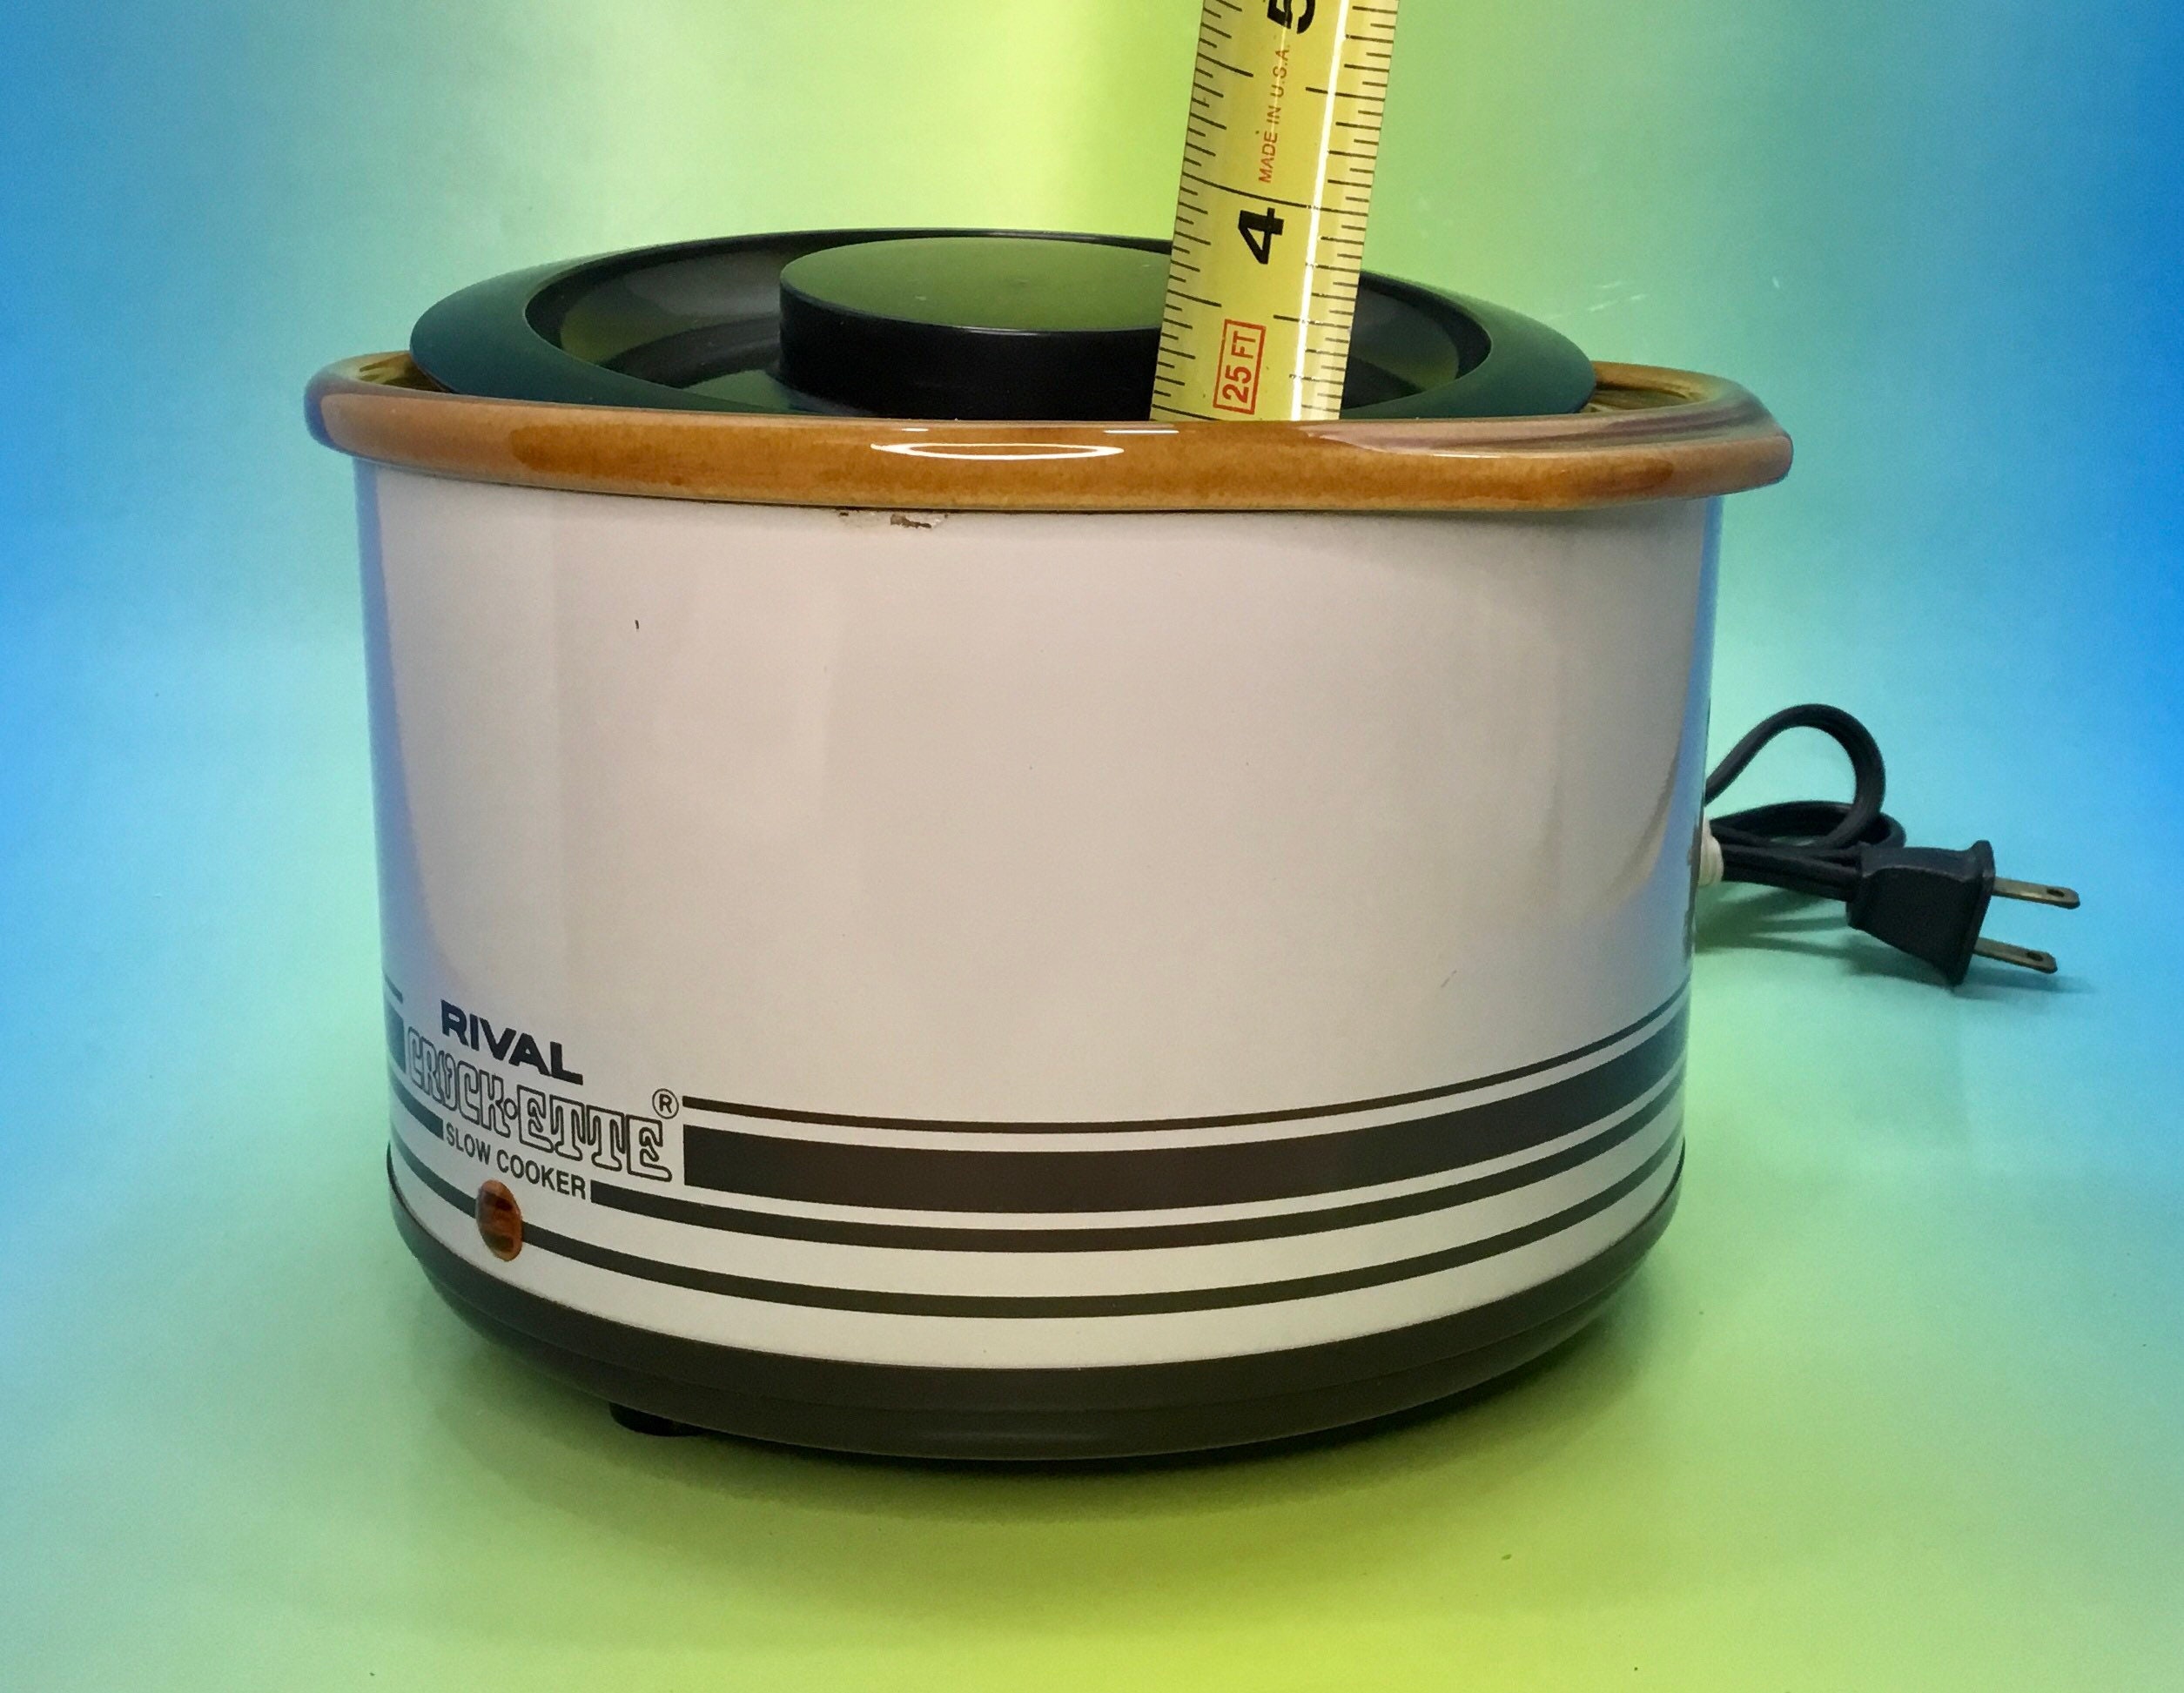 RIVAL Crock-ette 47 Watts 1 Quart Slow Cooker Mini Crock Pot Model 3205 120V